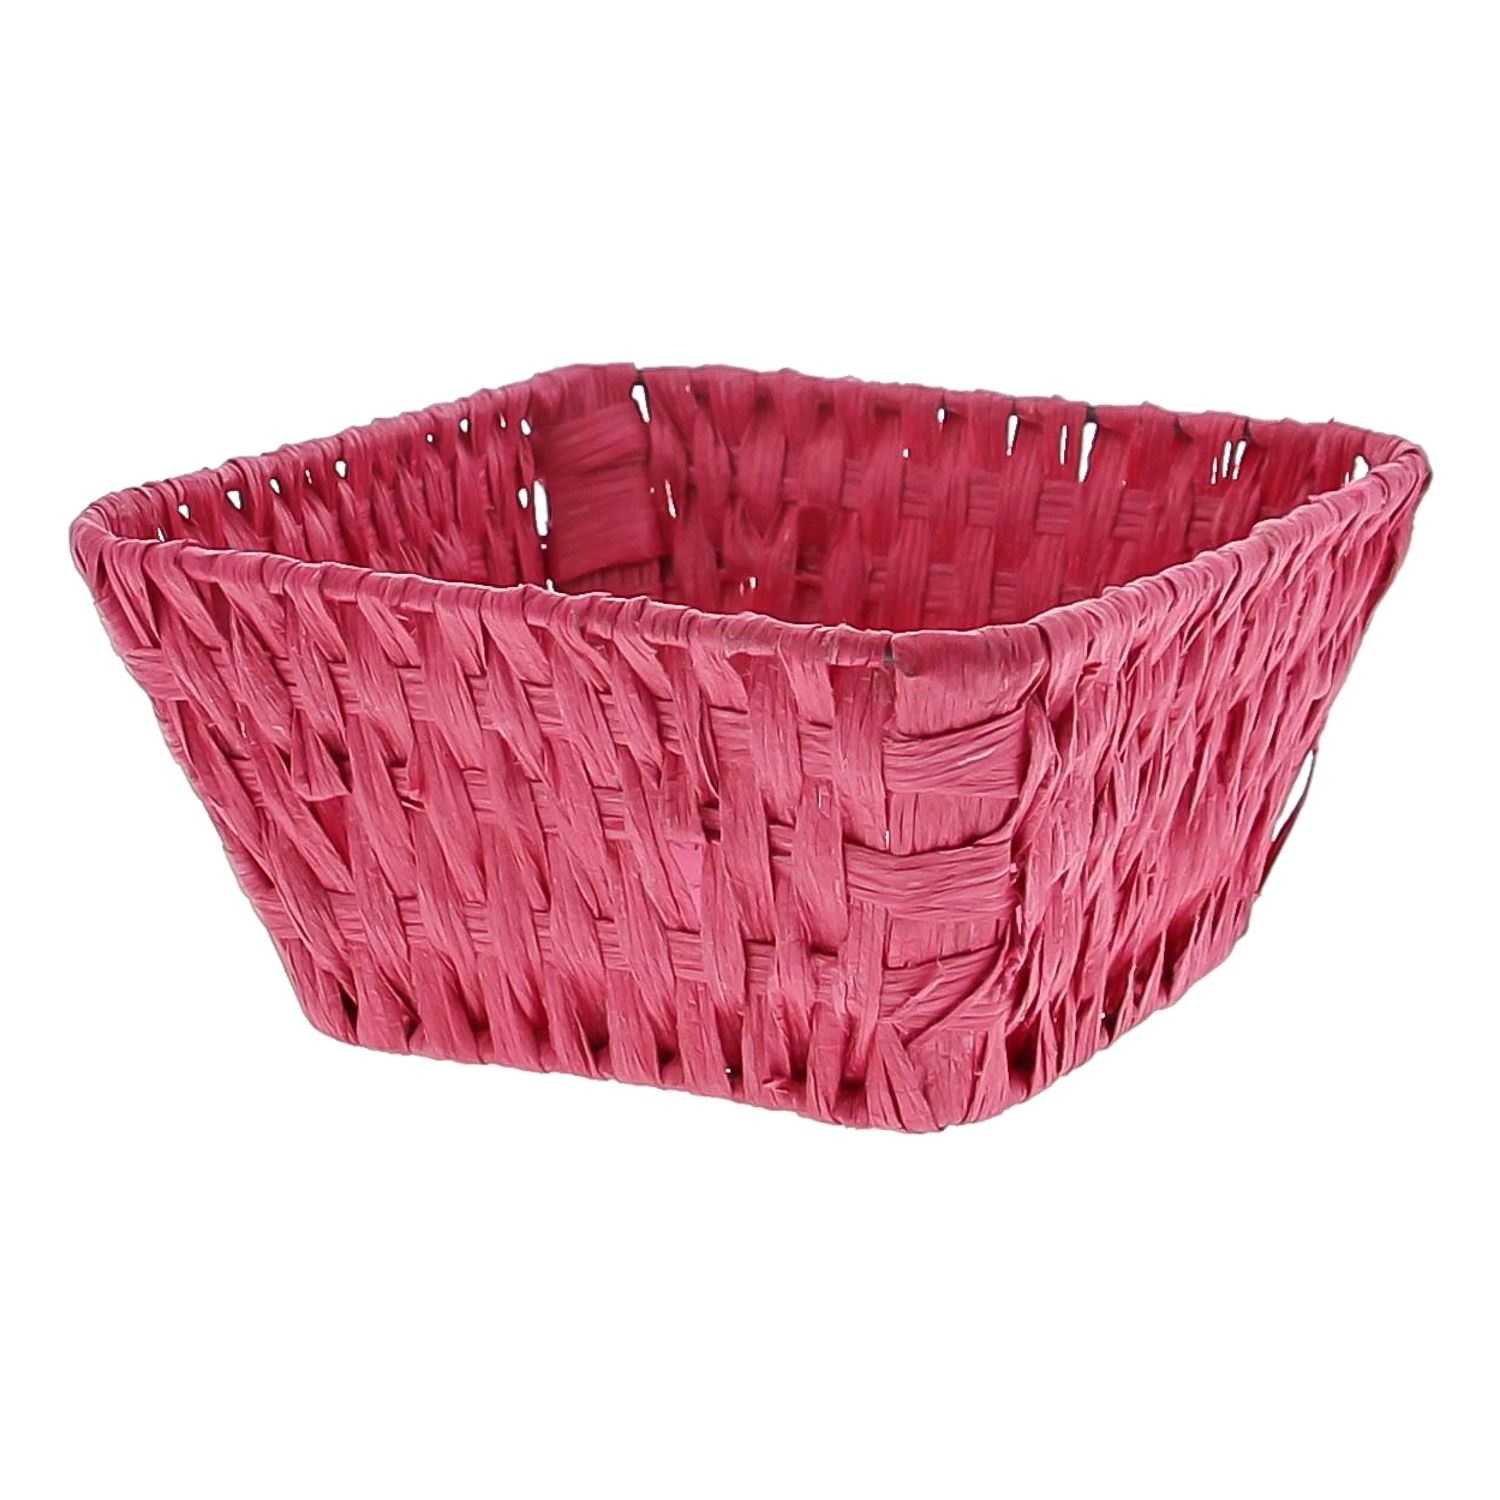 Square wicker basket - rasberry  - 9 pieces